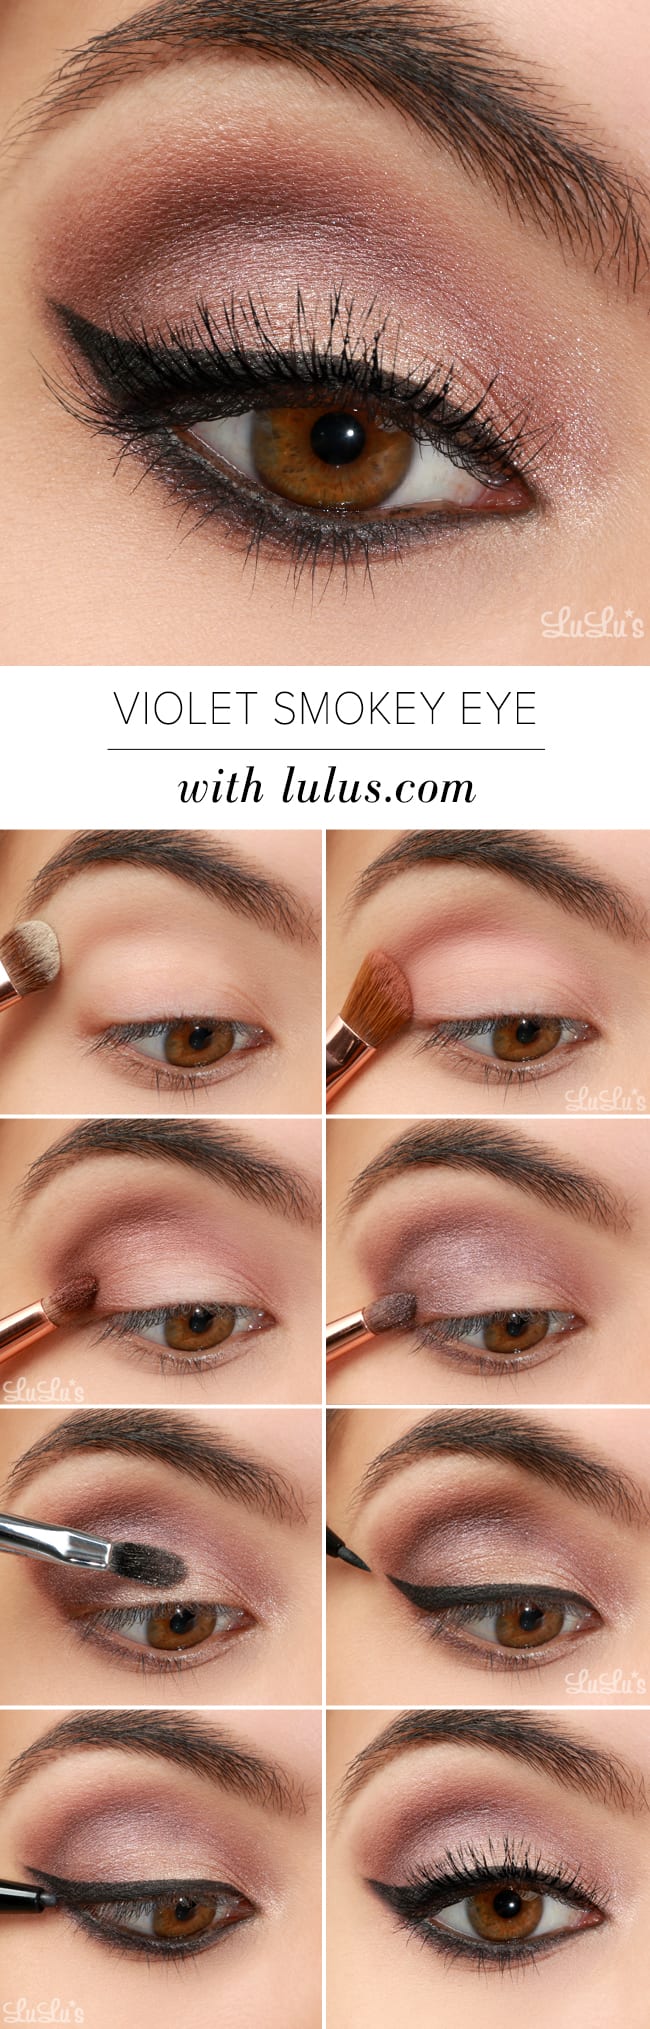 filosofisk forord blive irriteret Lulus How-To: Violet Smokey Eye Makeup Tutorial - Lulus.com Fashion Blog